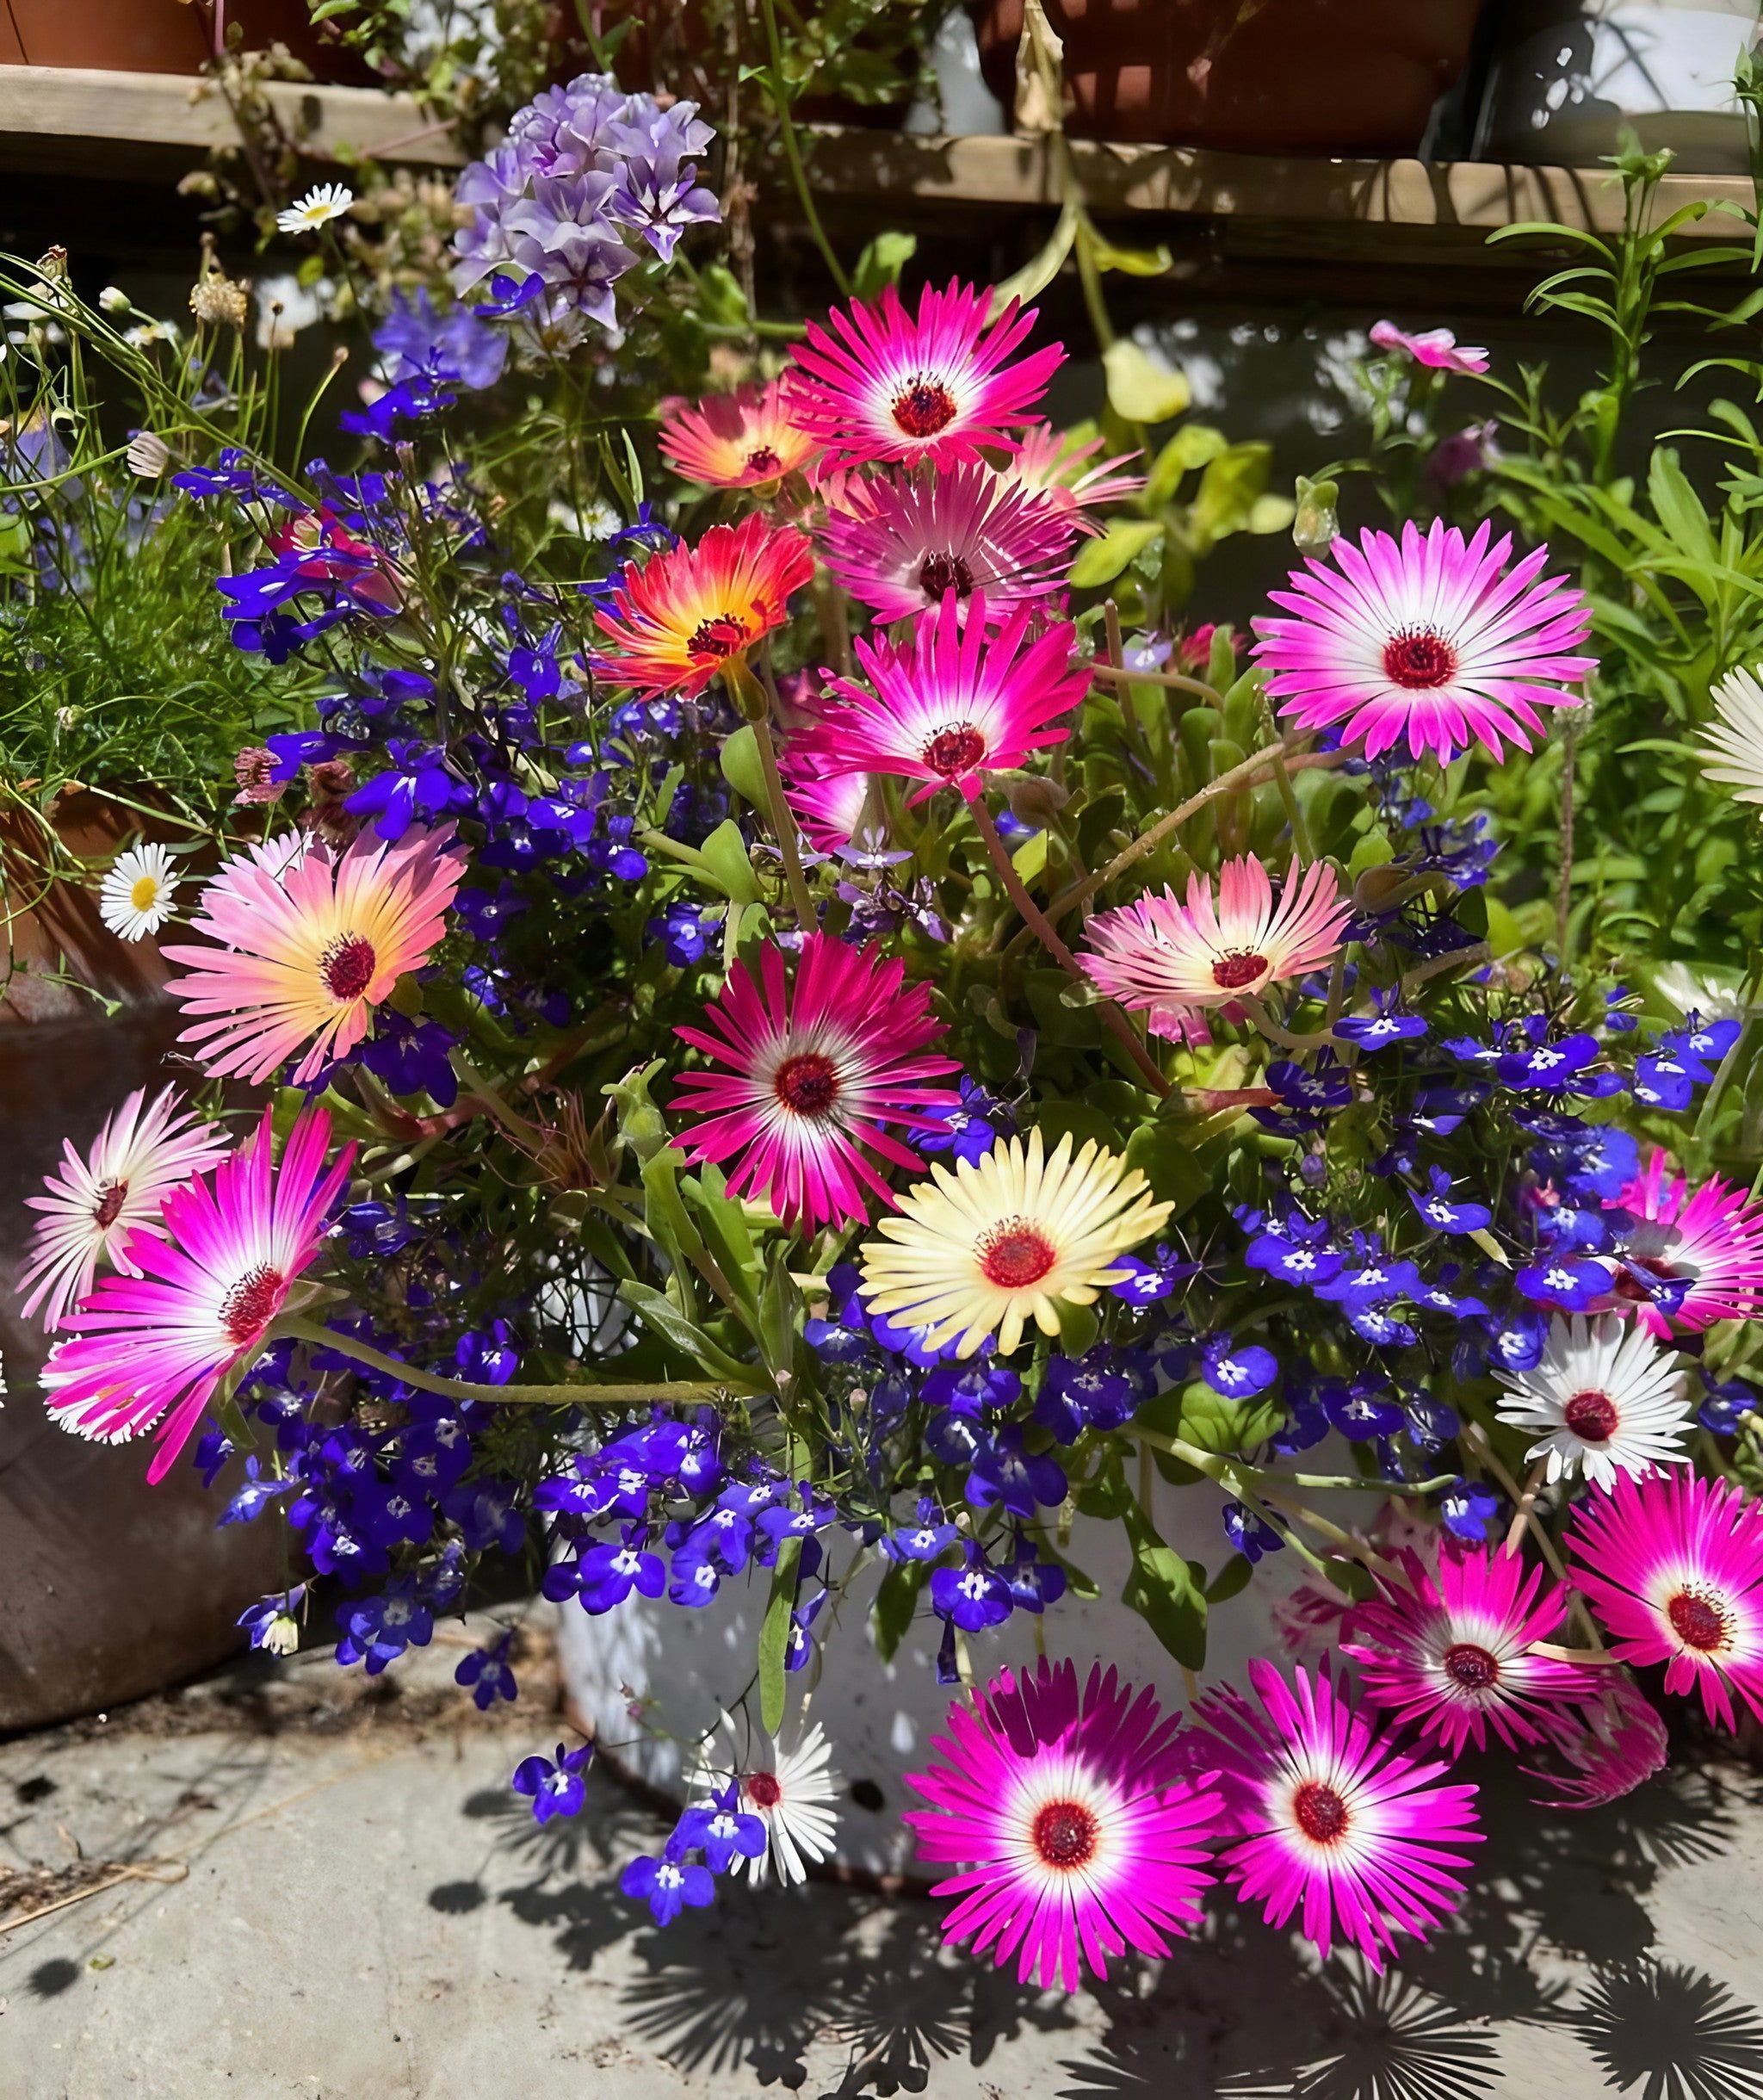 The Patio Flower Garden Collection